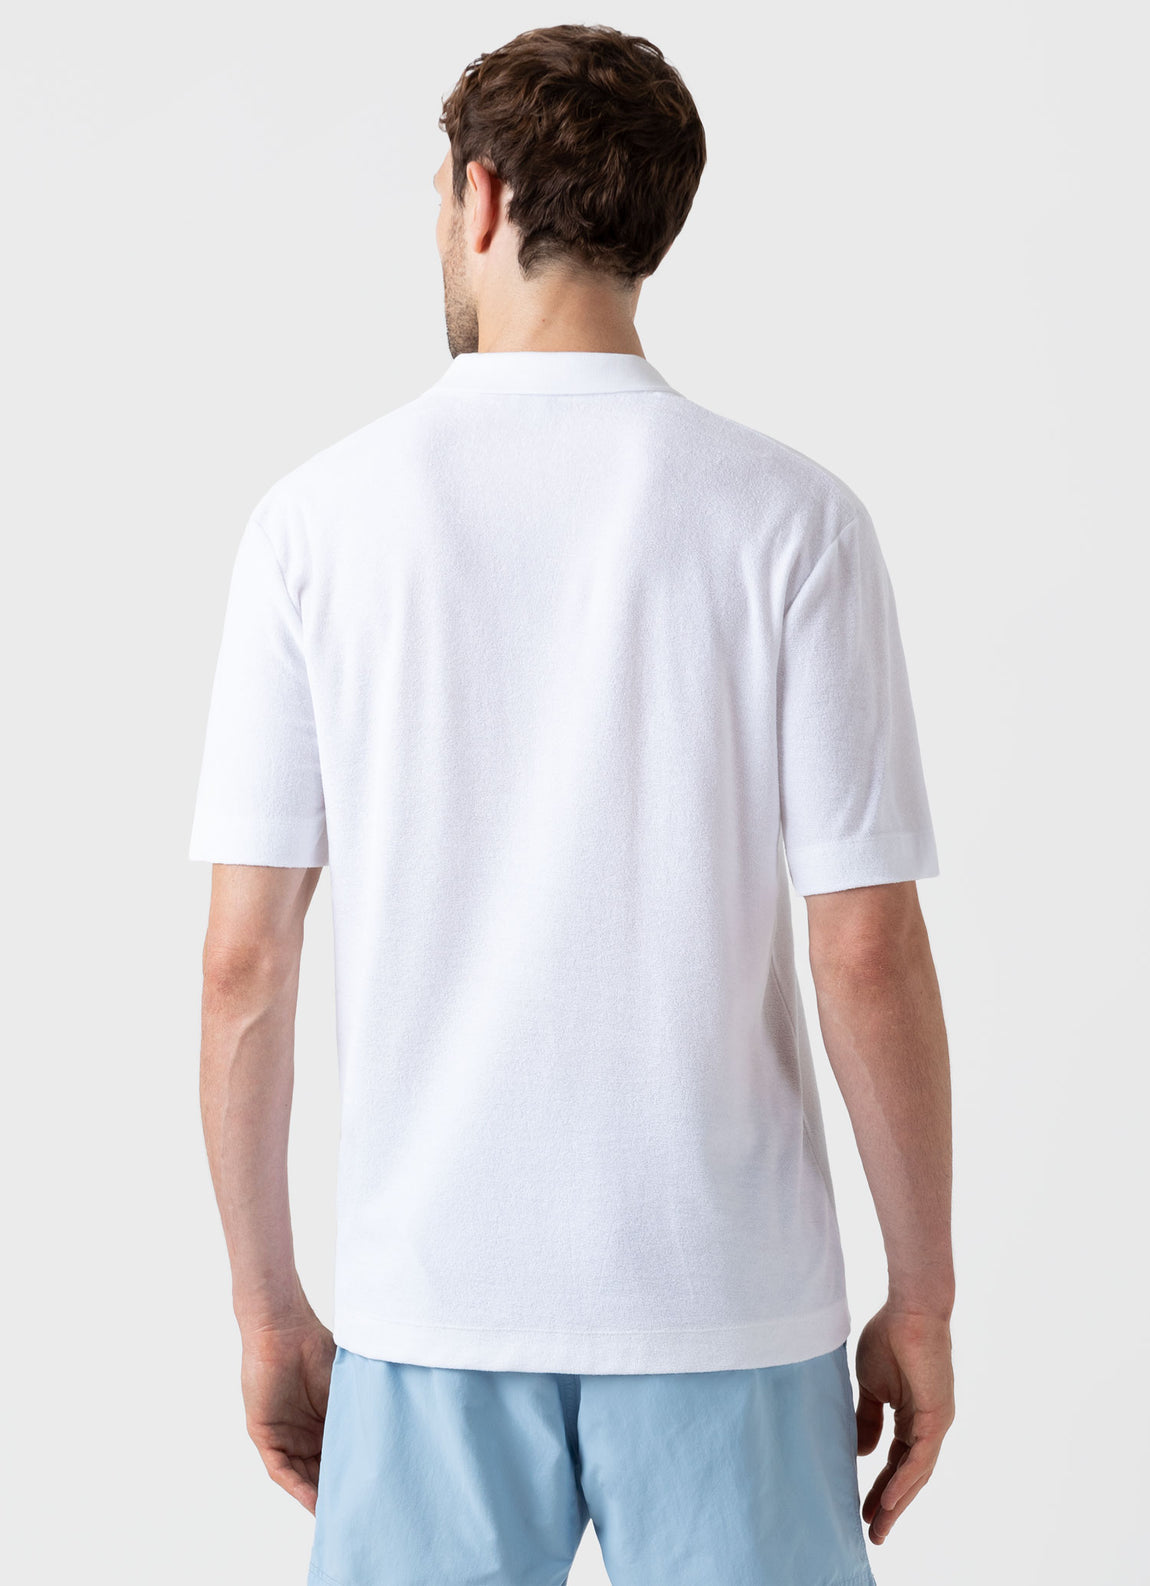 Men's Towelling Polo Shirt in White | Sunspel